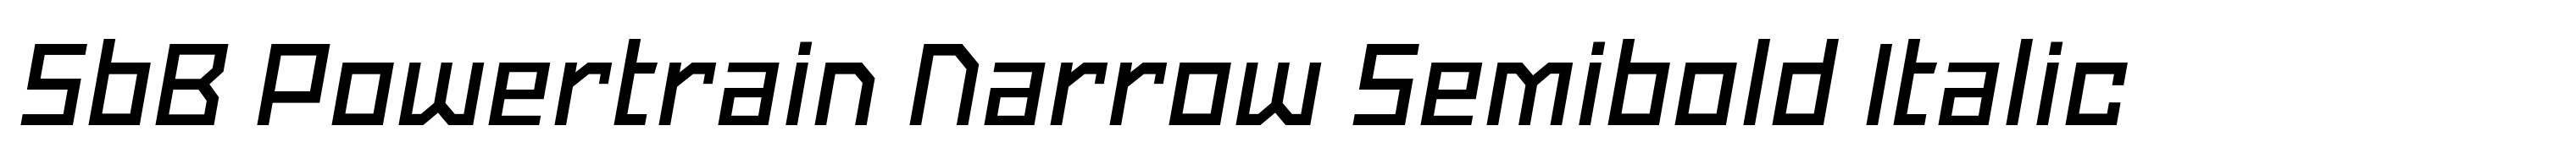 SbB Powertrain Narrow Semibold Italic